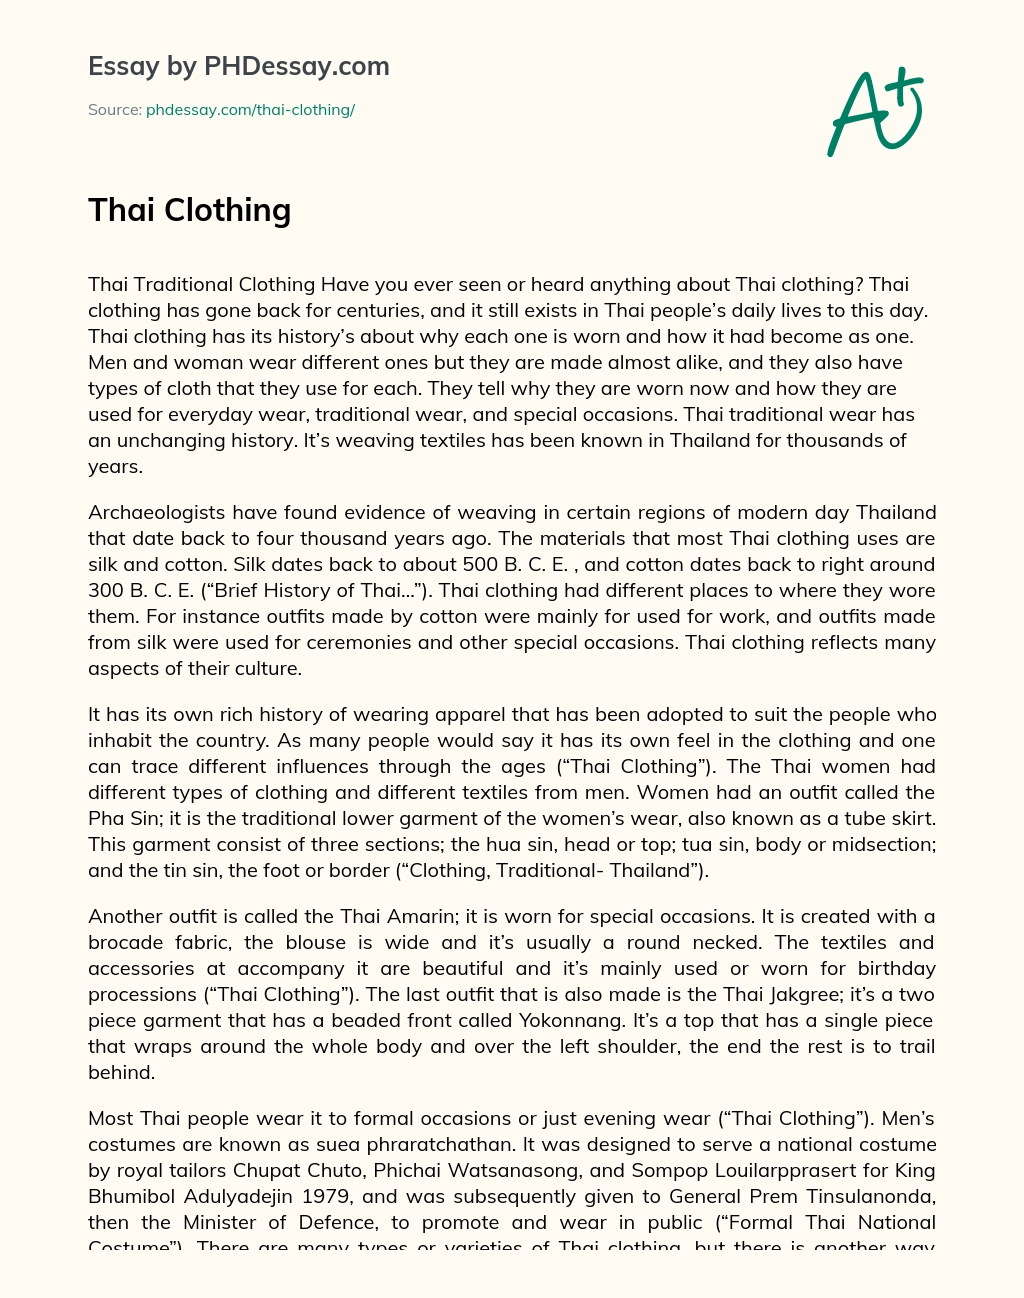 Thai Clothing essay